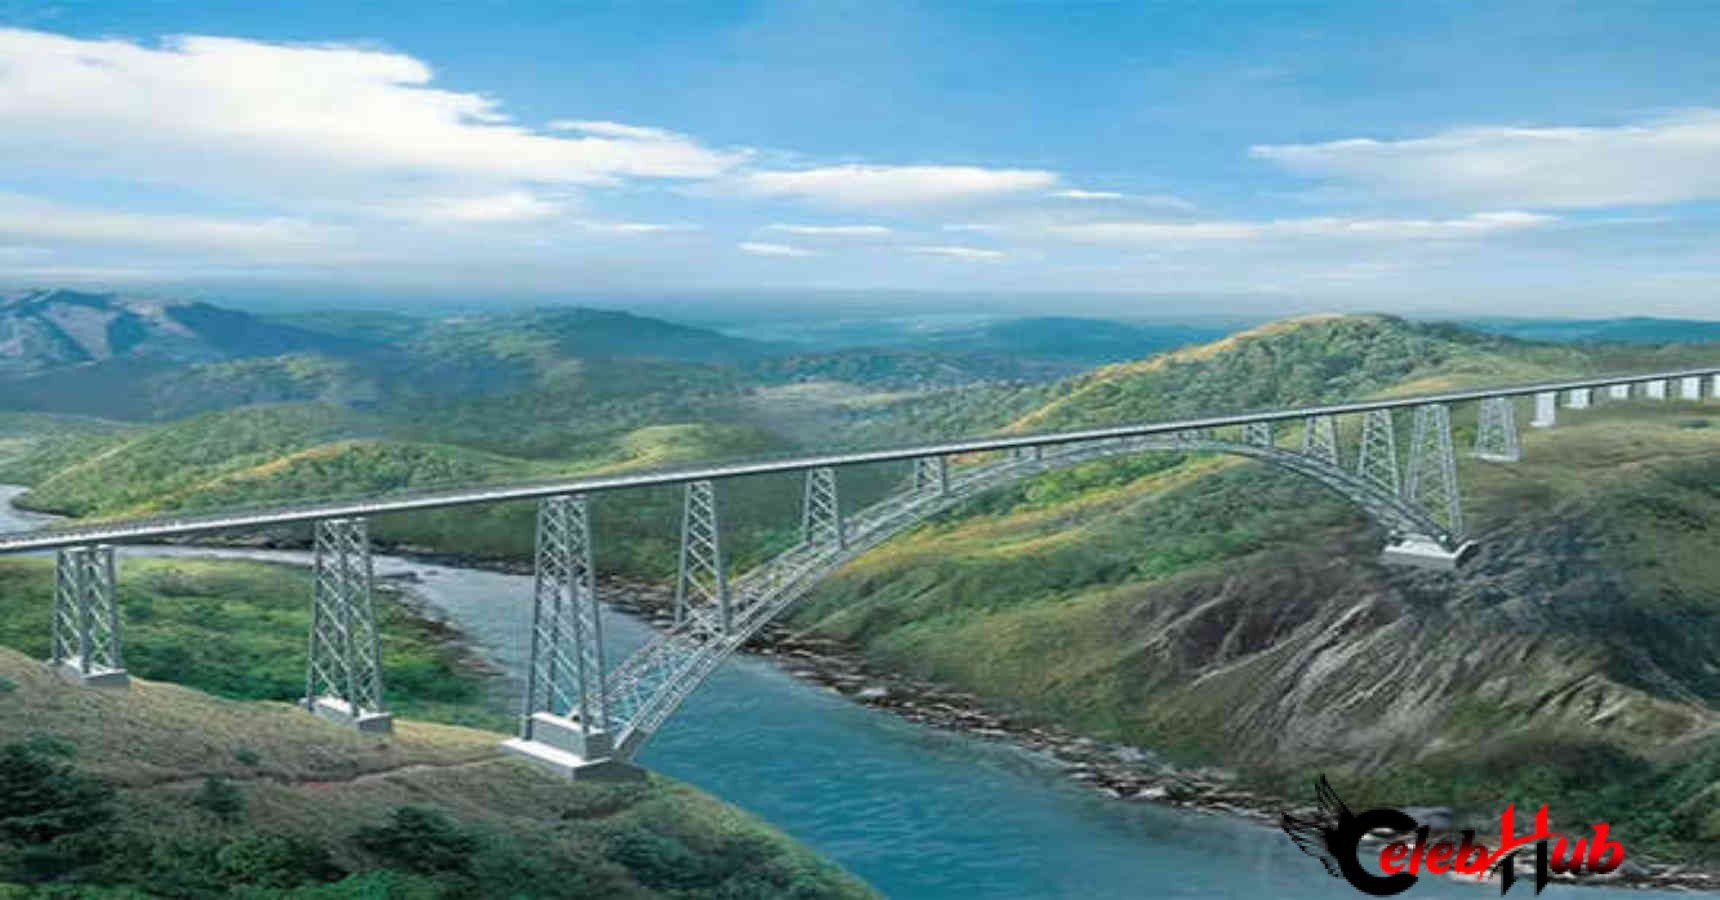 India's highest railway bridge